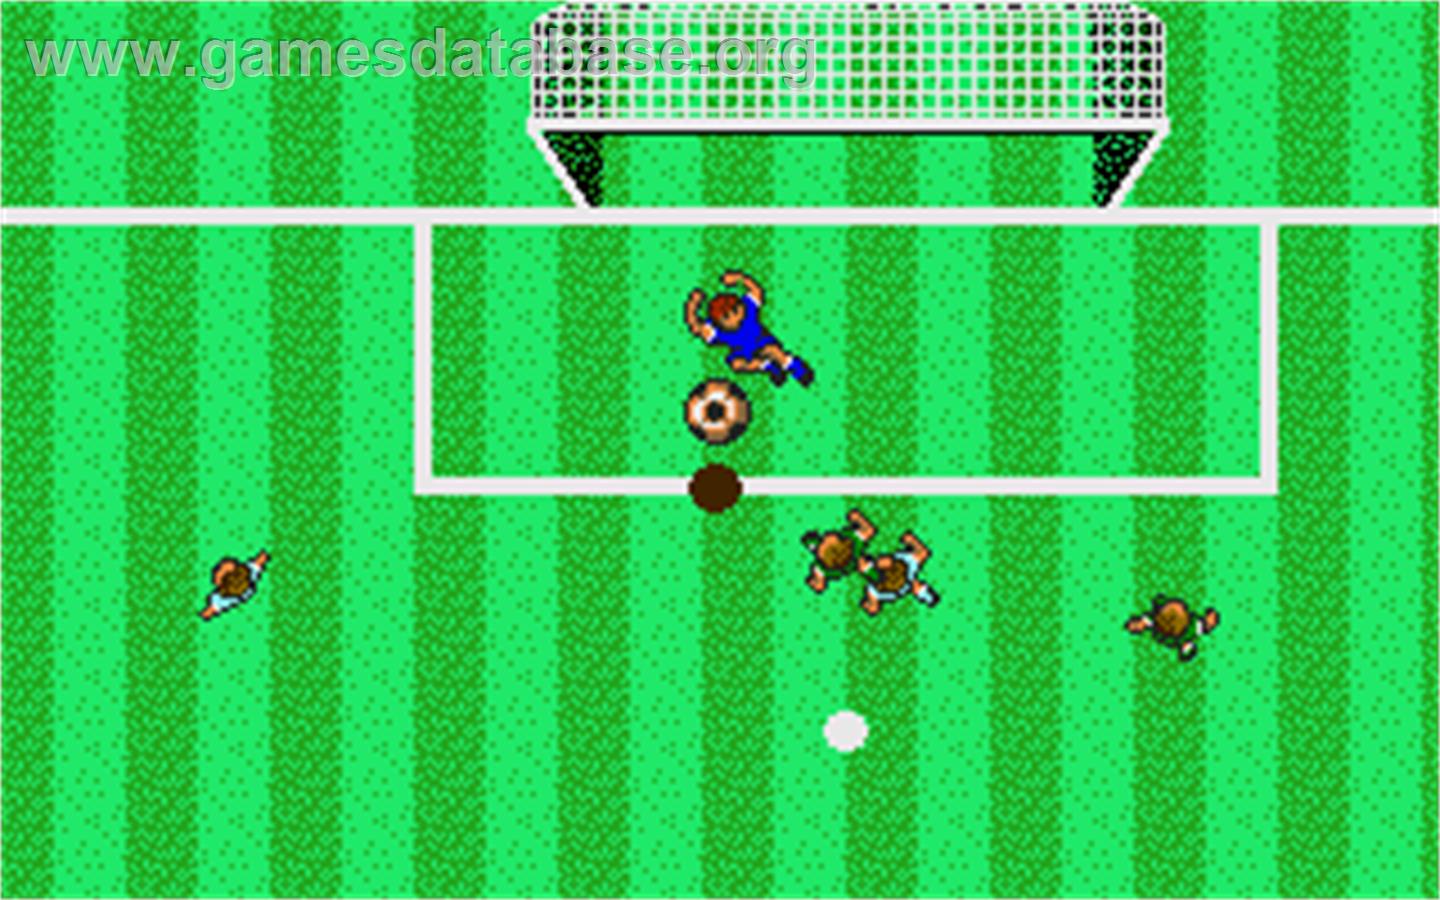 Microprose Pro Soccer - Atari ST - Artwork - In Game